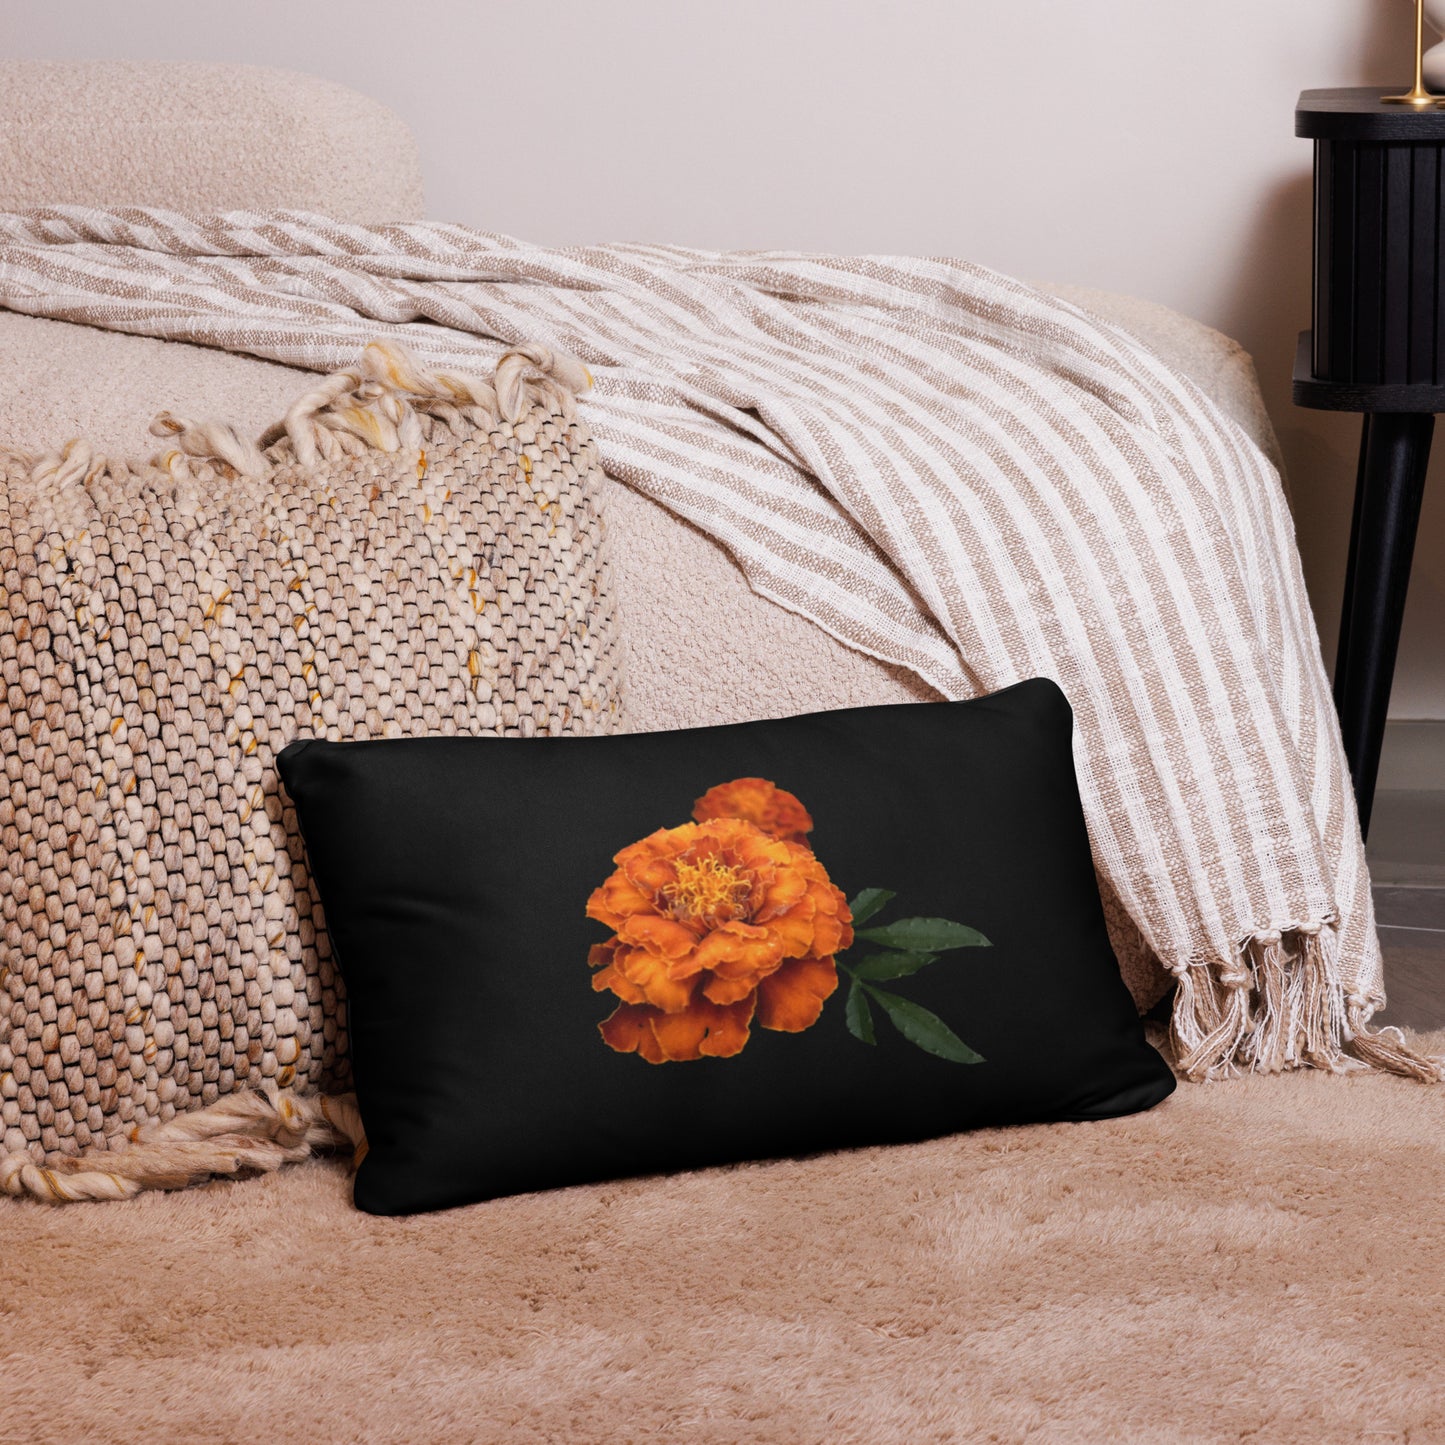 "Orange Flower" Soft Pillow